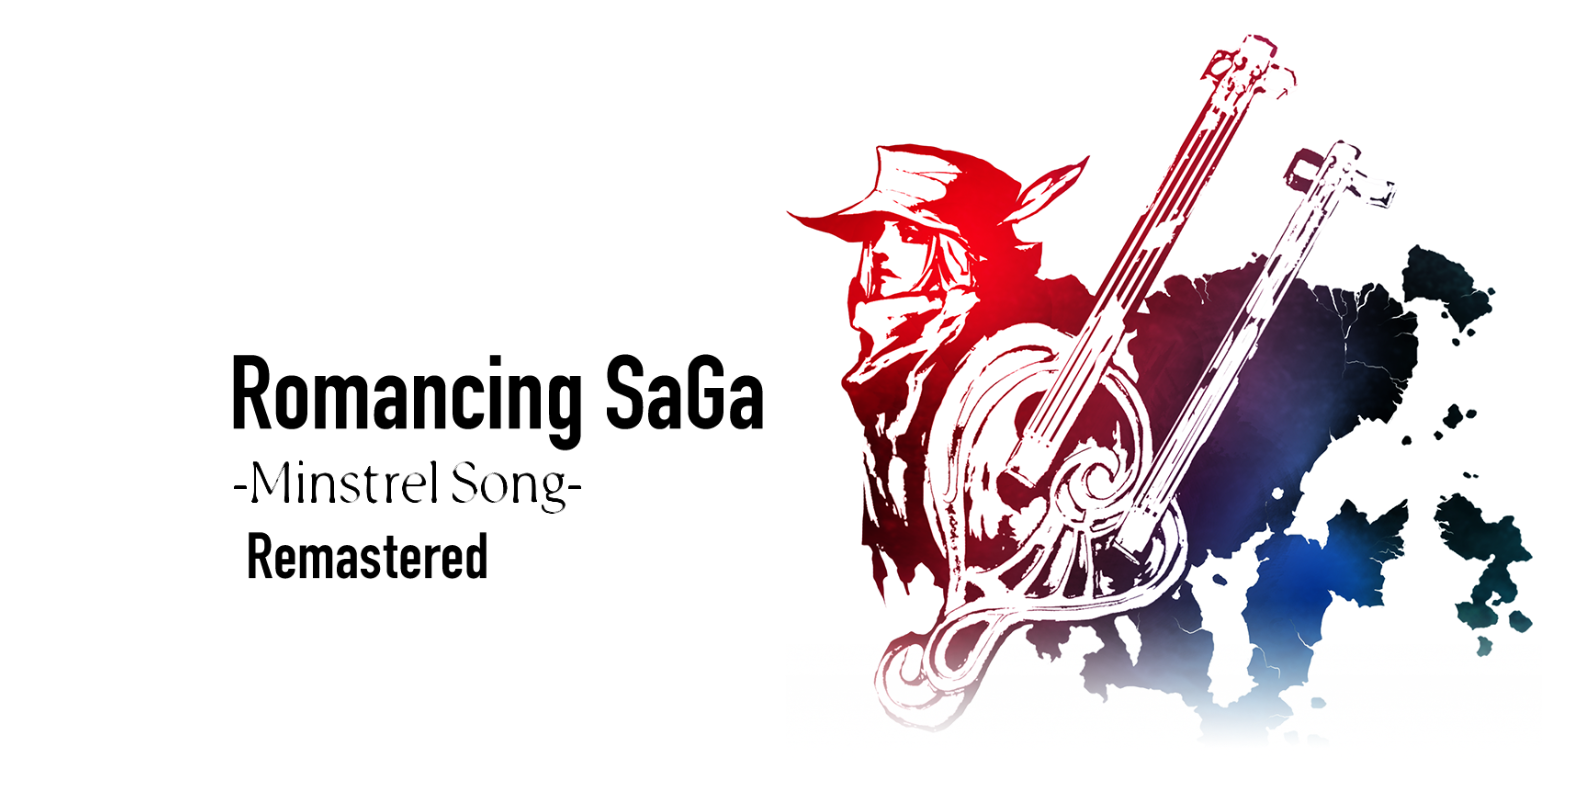 Romancing SaGa Minstrel Song Remaster Announcement Hero